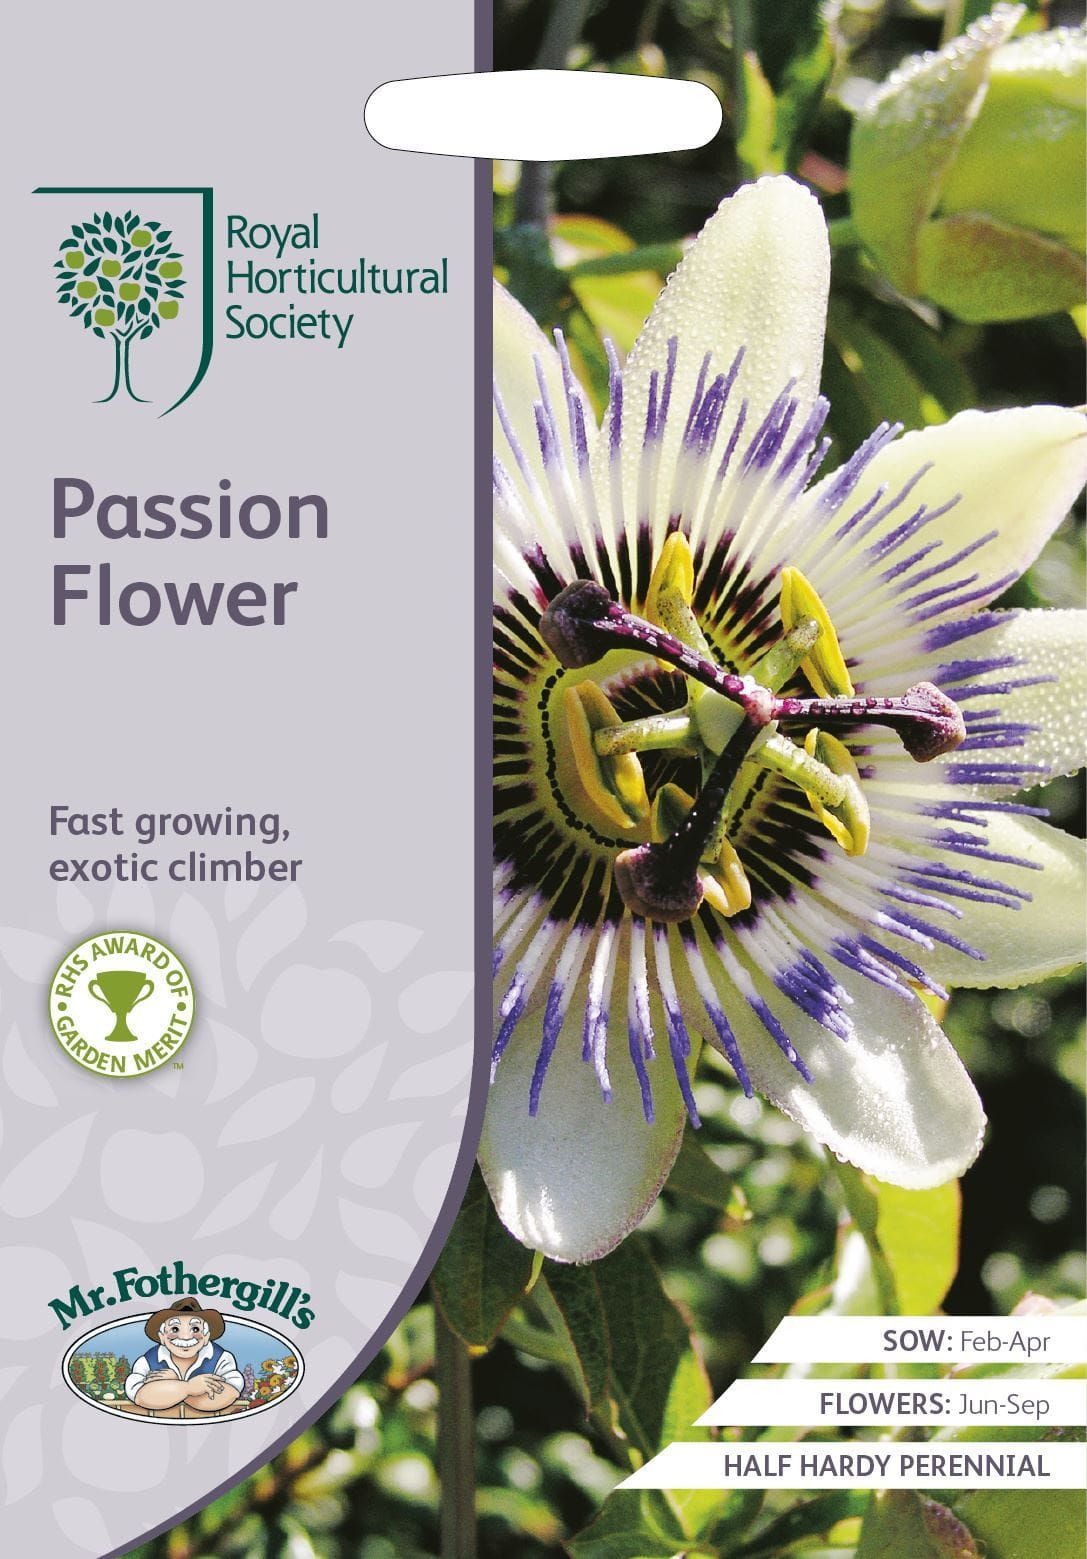 Mr Fothergills RHS Passion Flower Caerulea passiflora - 50 Seeds